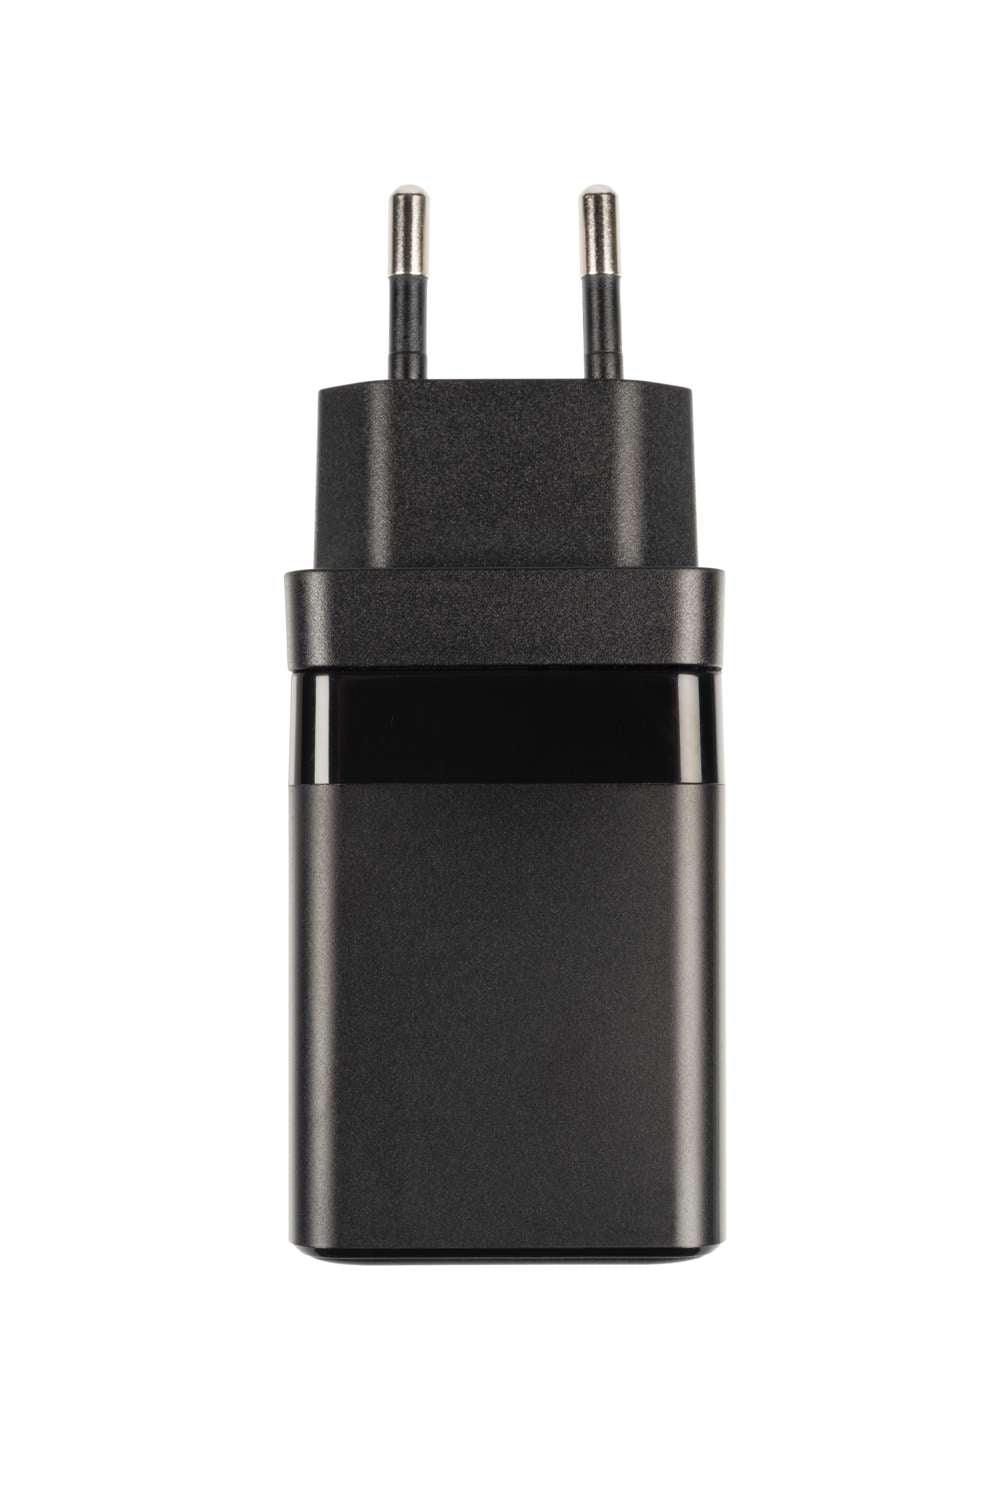 Xtorm Xtorm XA011 Volt Reisstekker - EU/VK/VS naar 2xUSB + Xtorm USB naar USB-C kabel